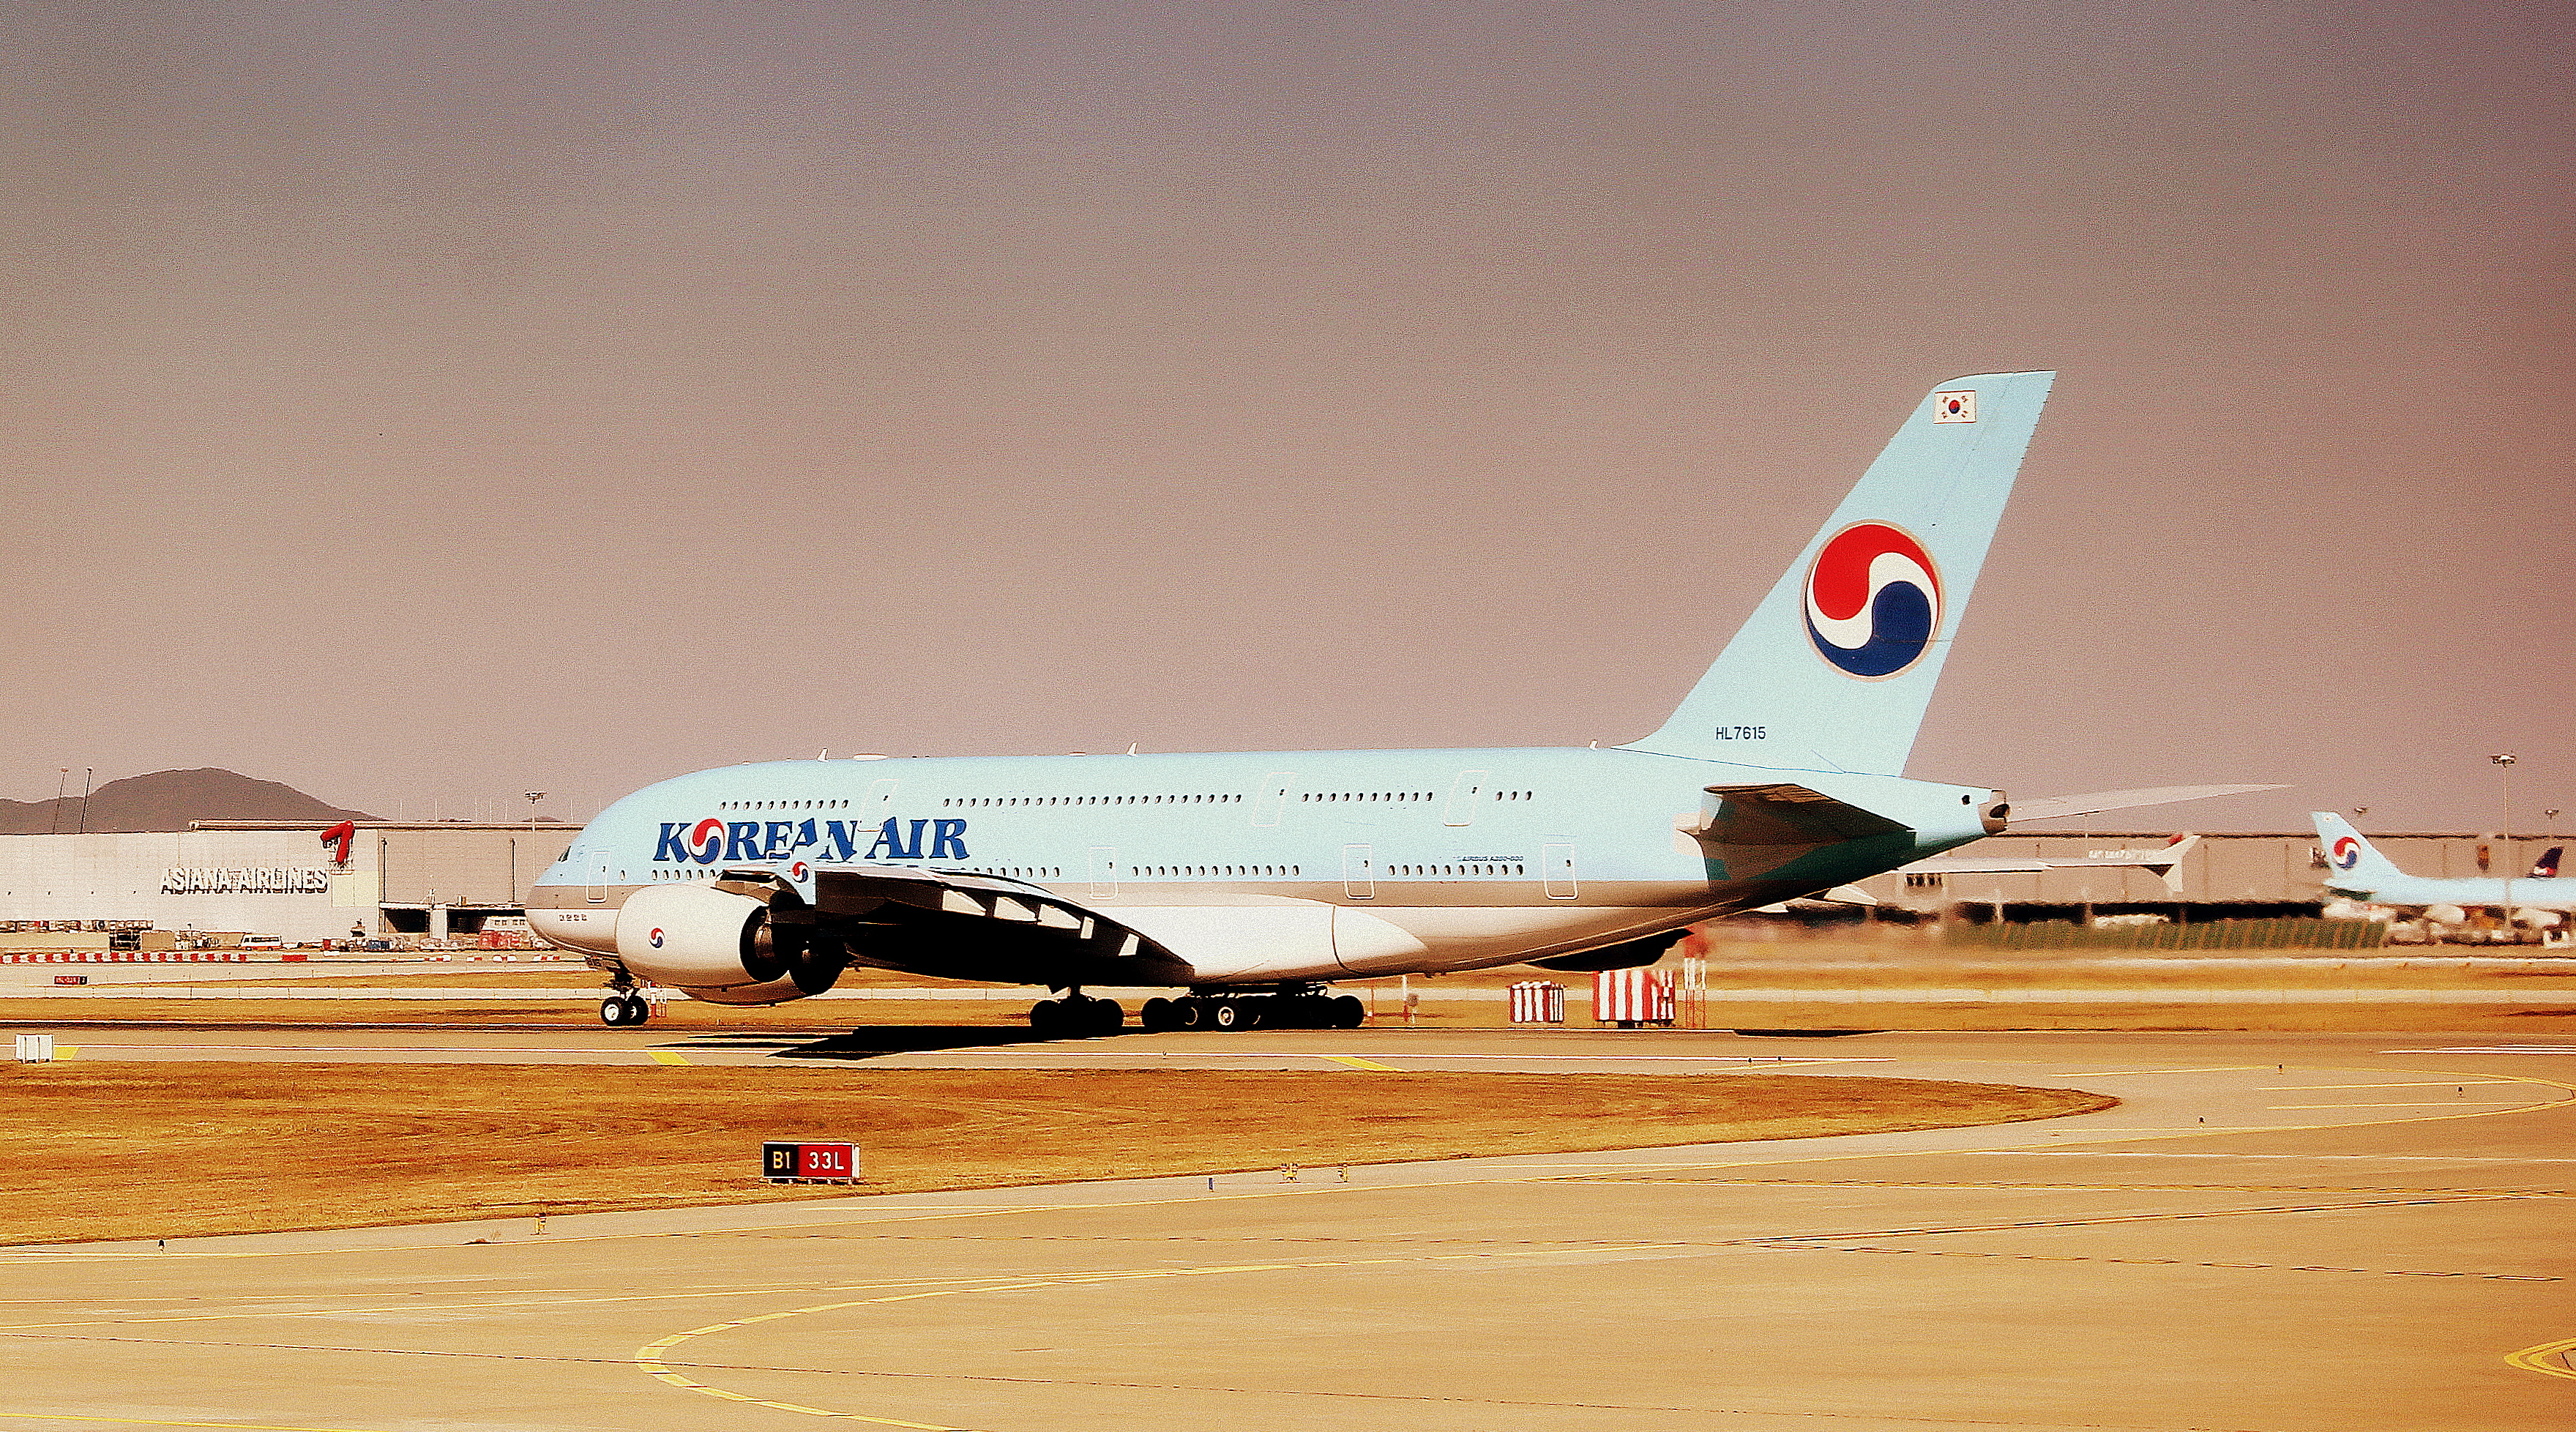 KOREAN AIR AIRBUS A380 LINING UP AT SEOUL INCHEON AIRPORT SOUTH KOREA OCT 2012 (8149925333)